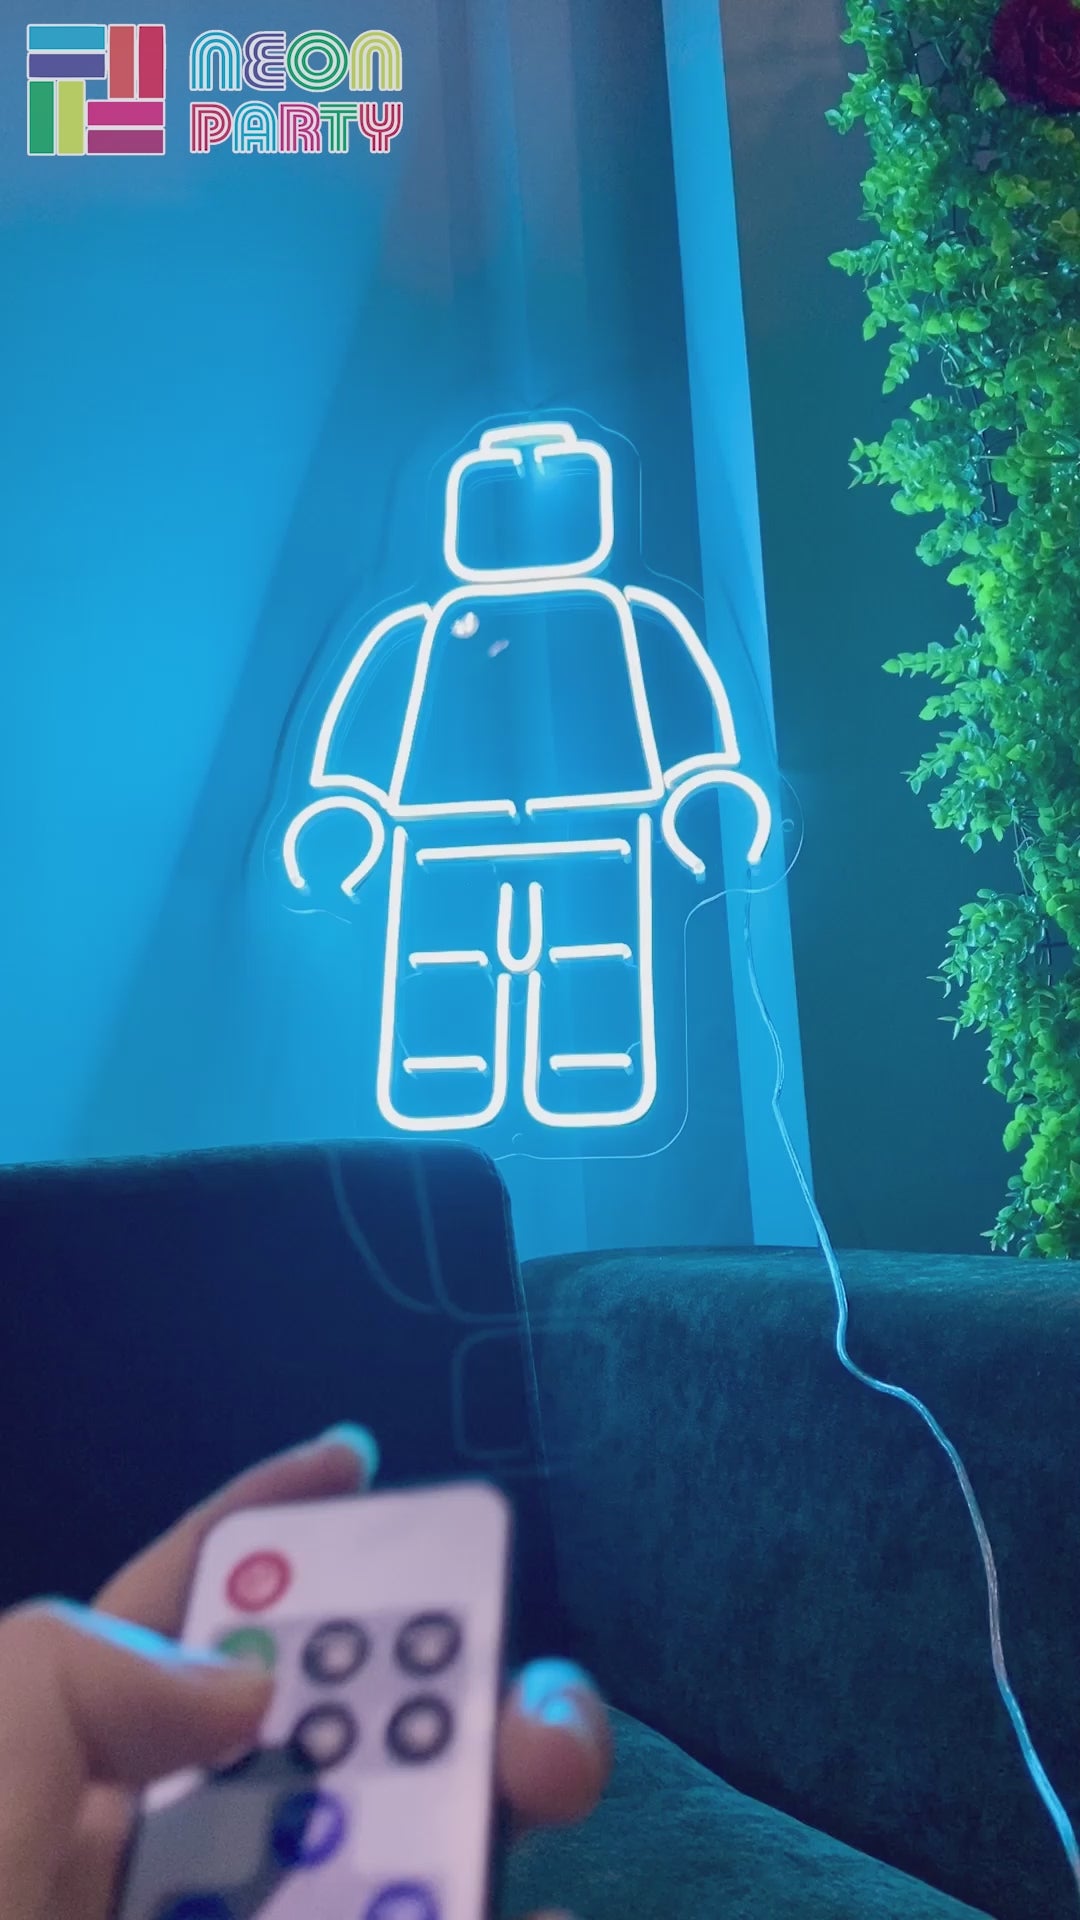 Robot glowing Neon sign